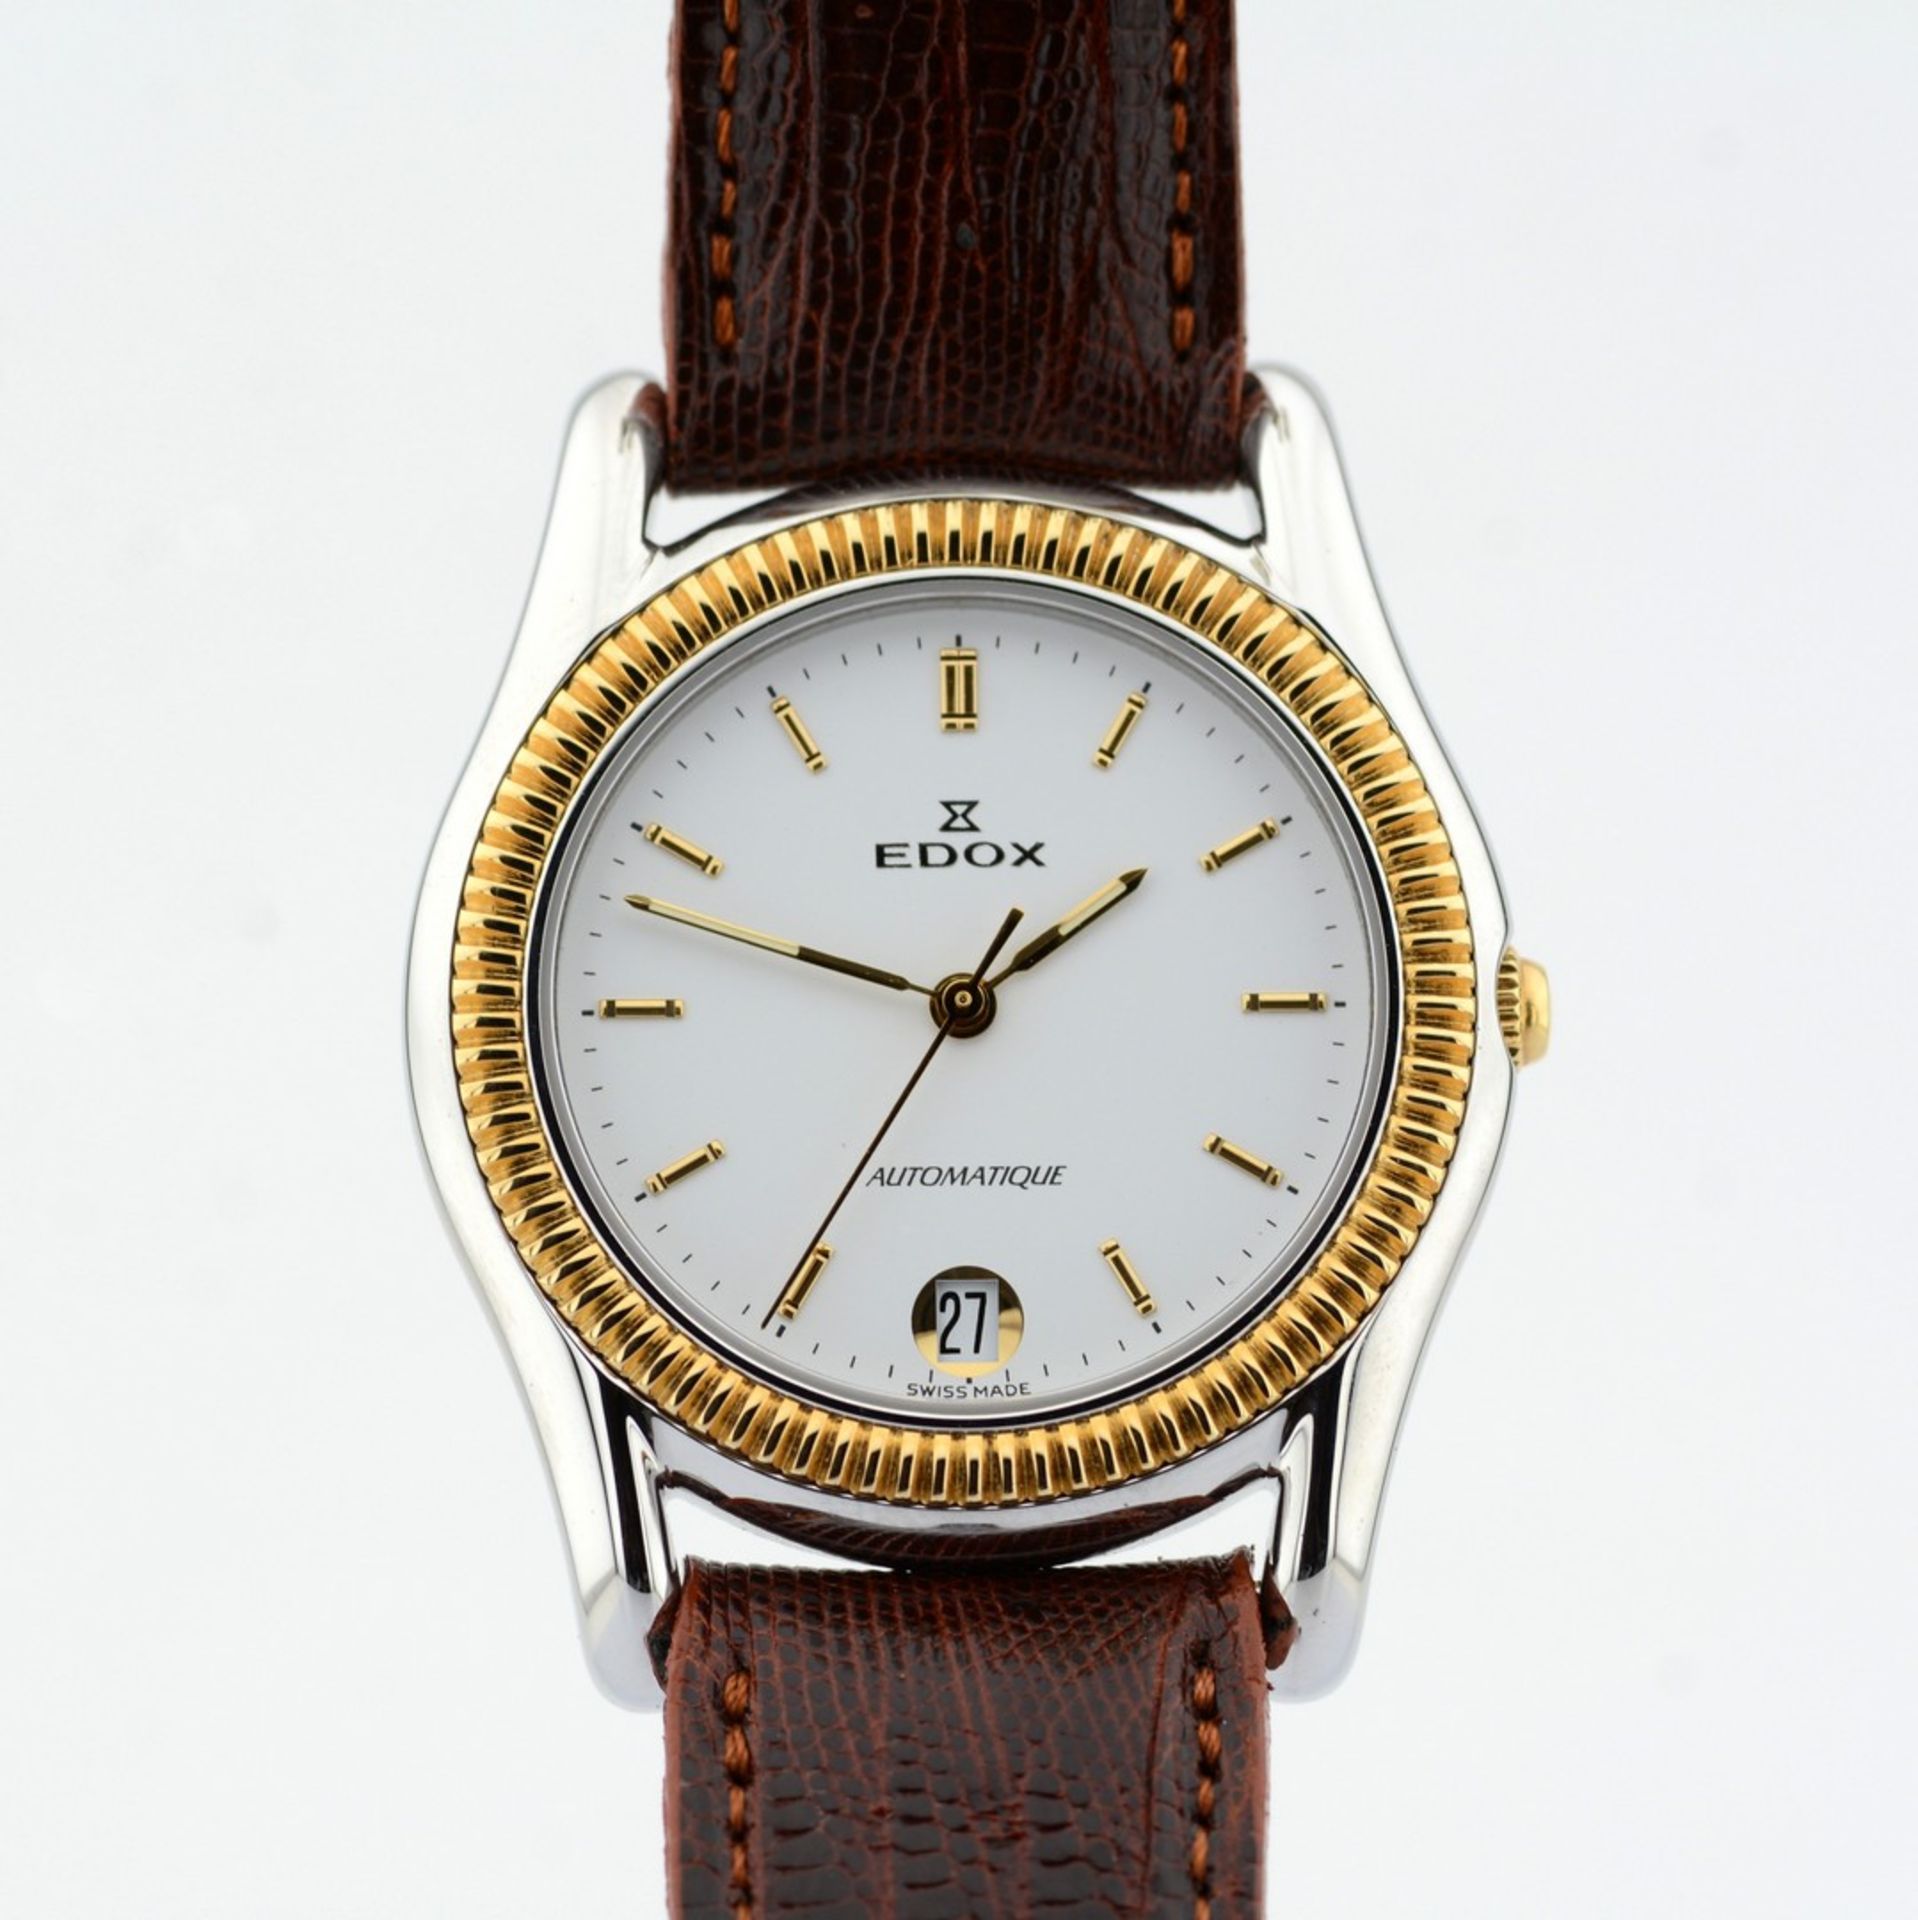 Edox / Automatic Date - Gentlemen's Gold/Steel Wristwatch - Image 3 of 7